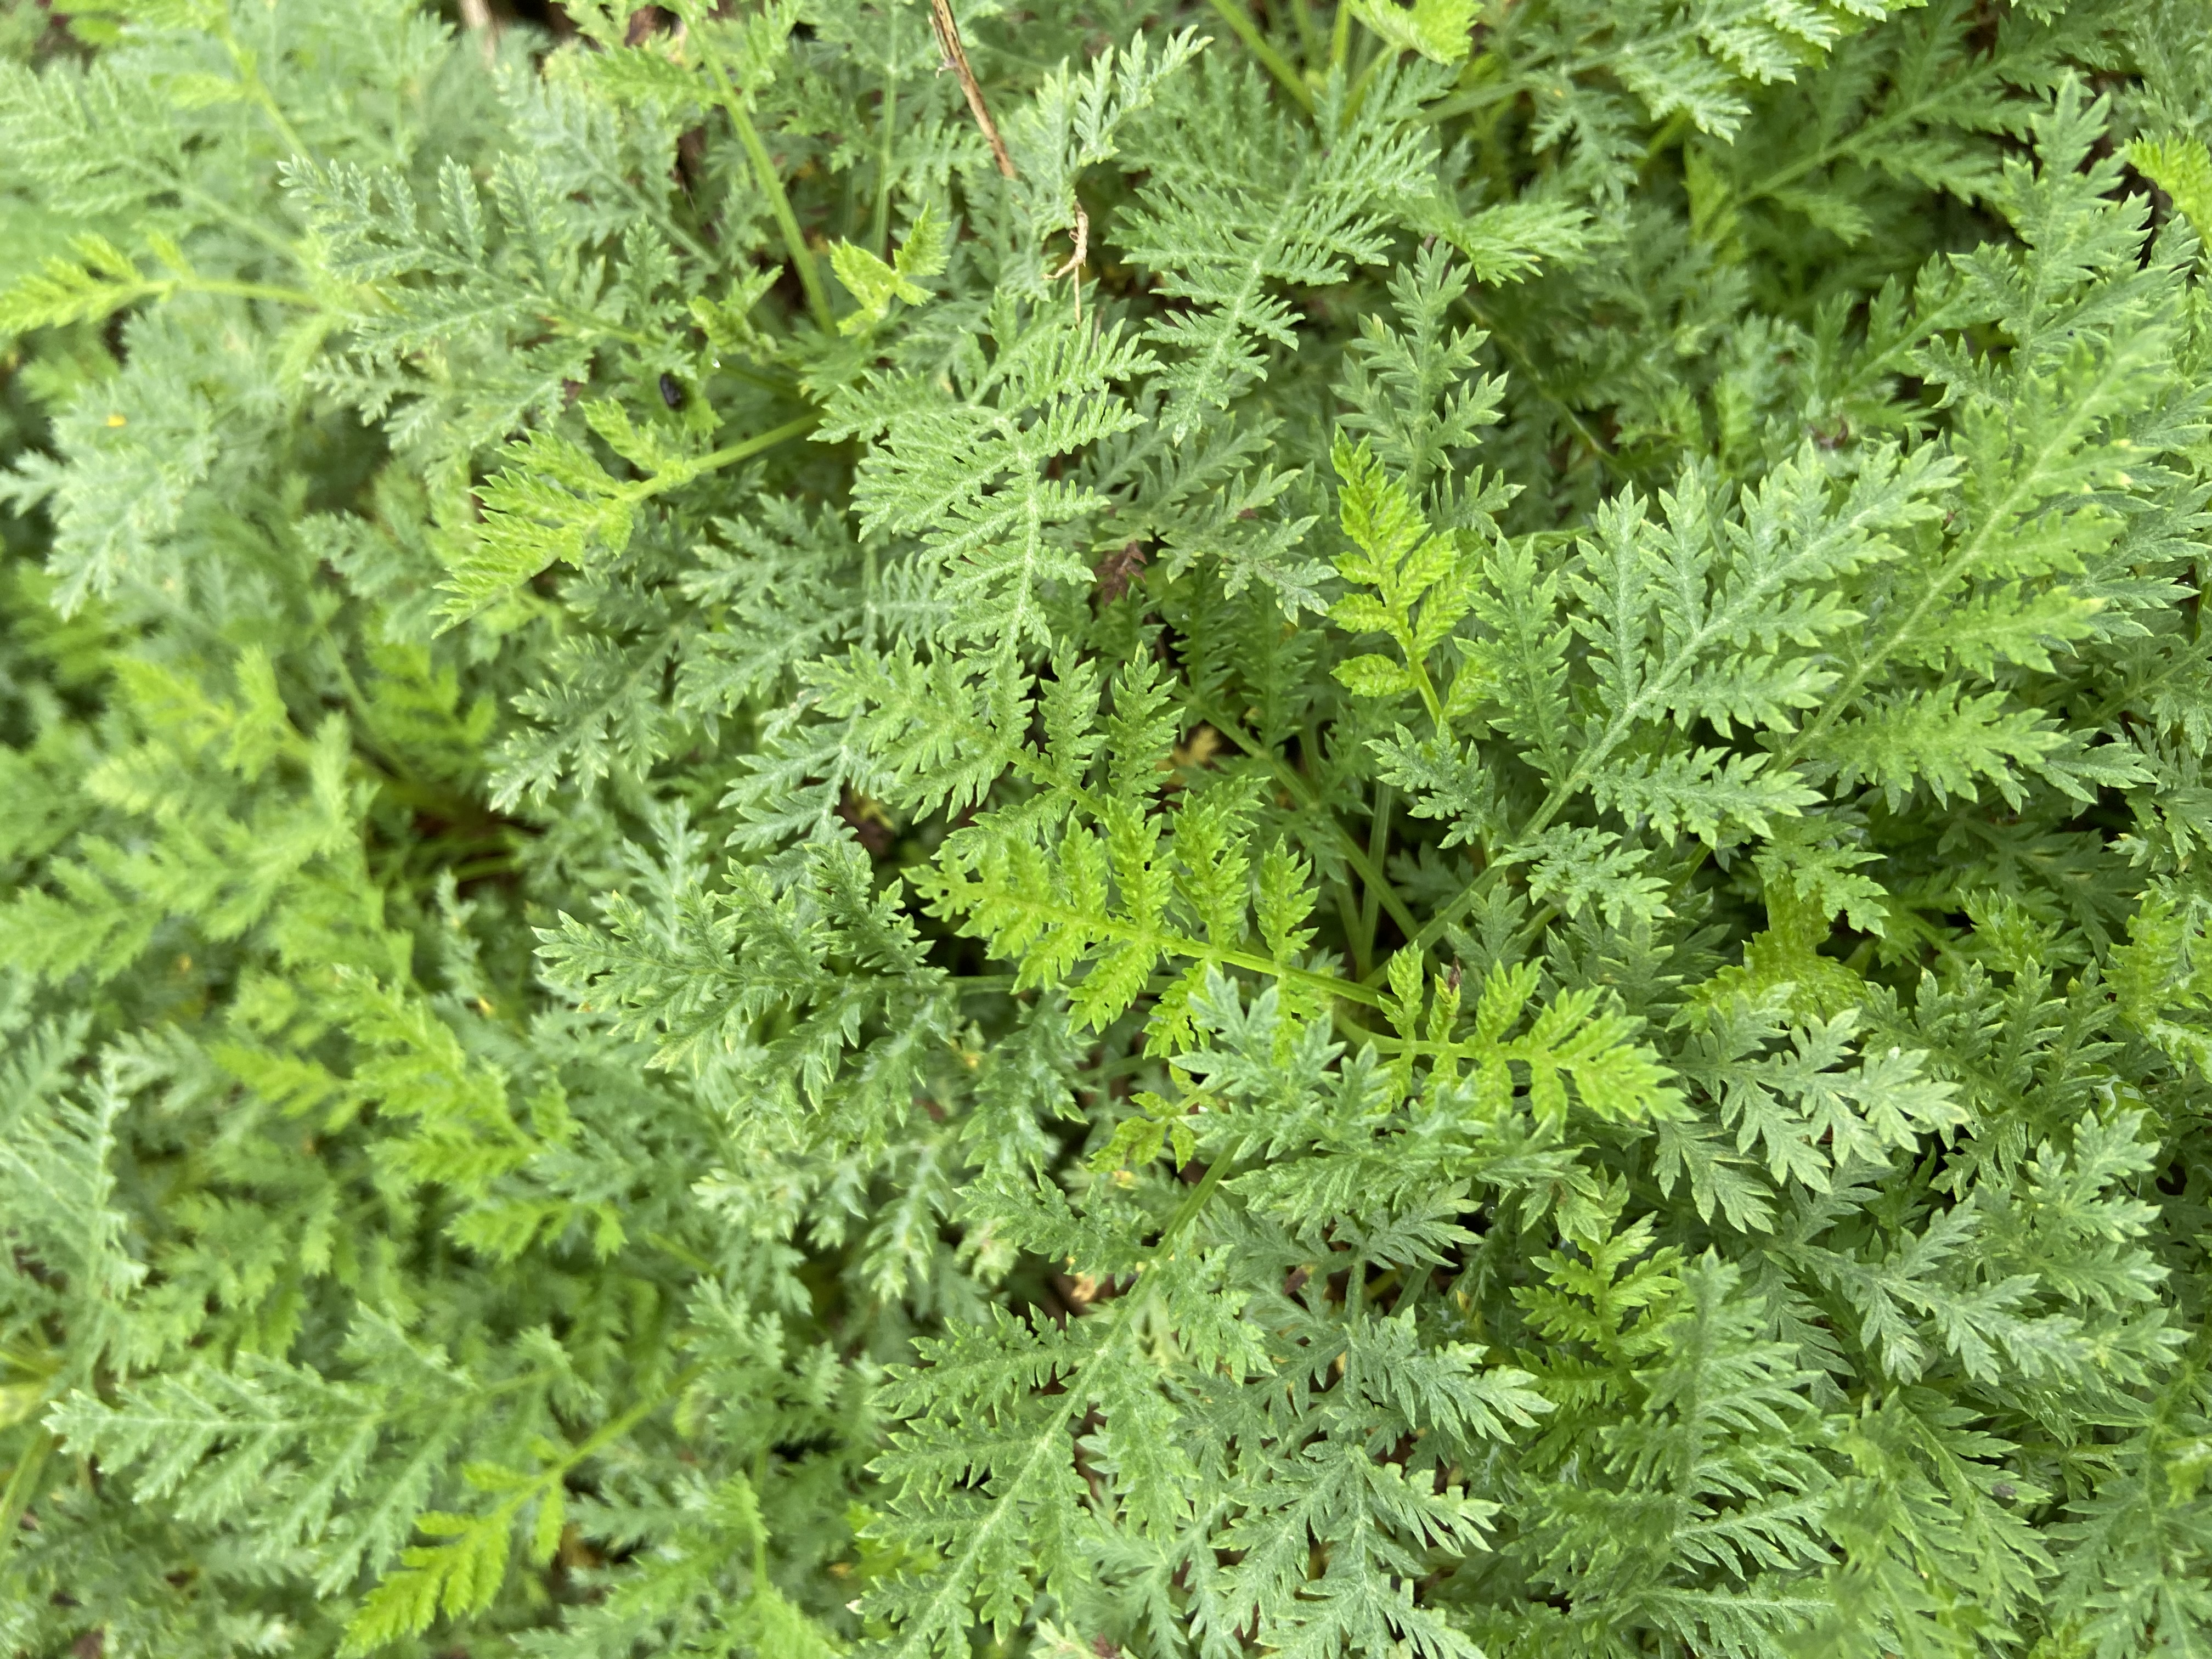 Artemisia gmelinii 'Balfernarc' - SunFern Arcadia Russian wormwood